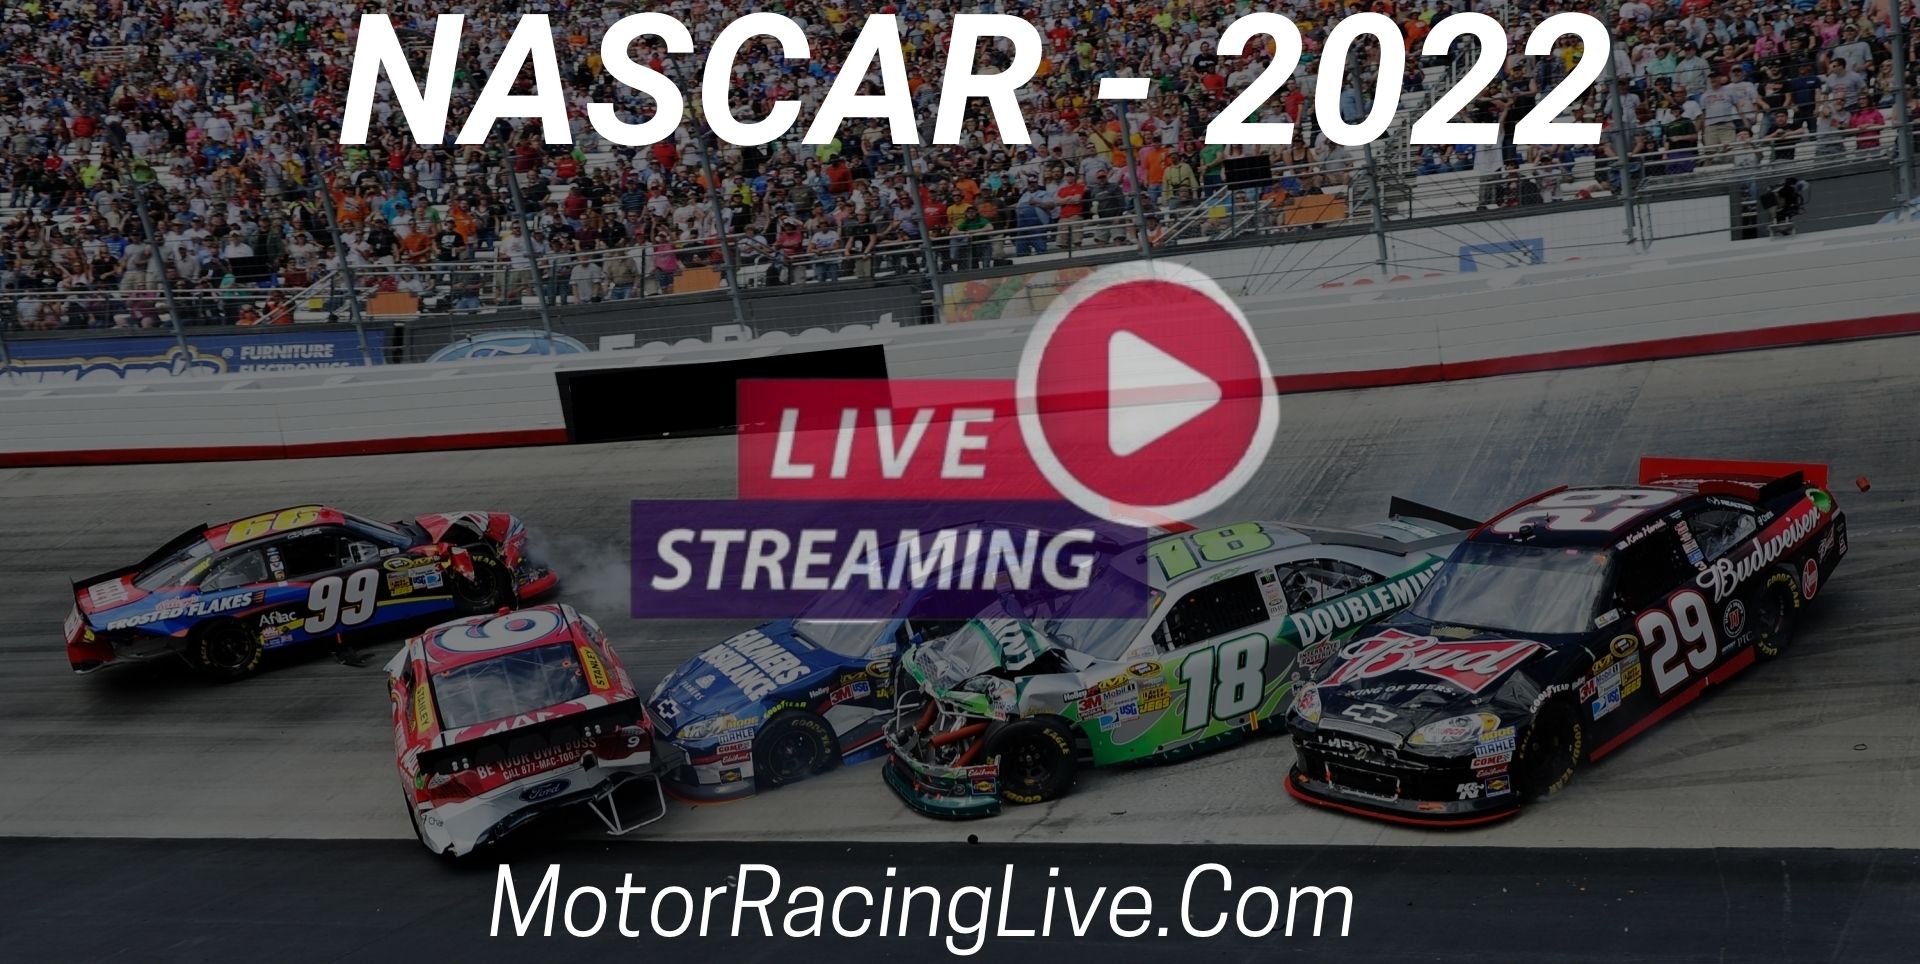 How to Watch NASCAR 2022 Live Stream